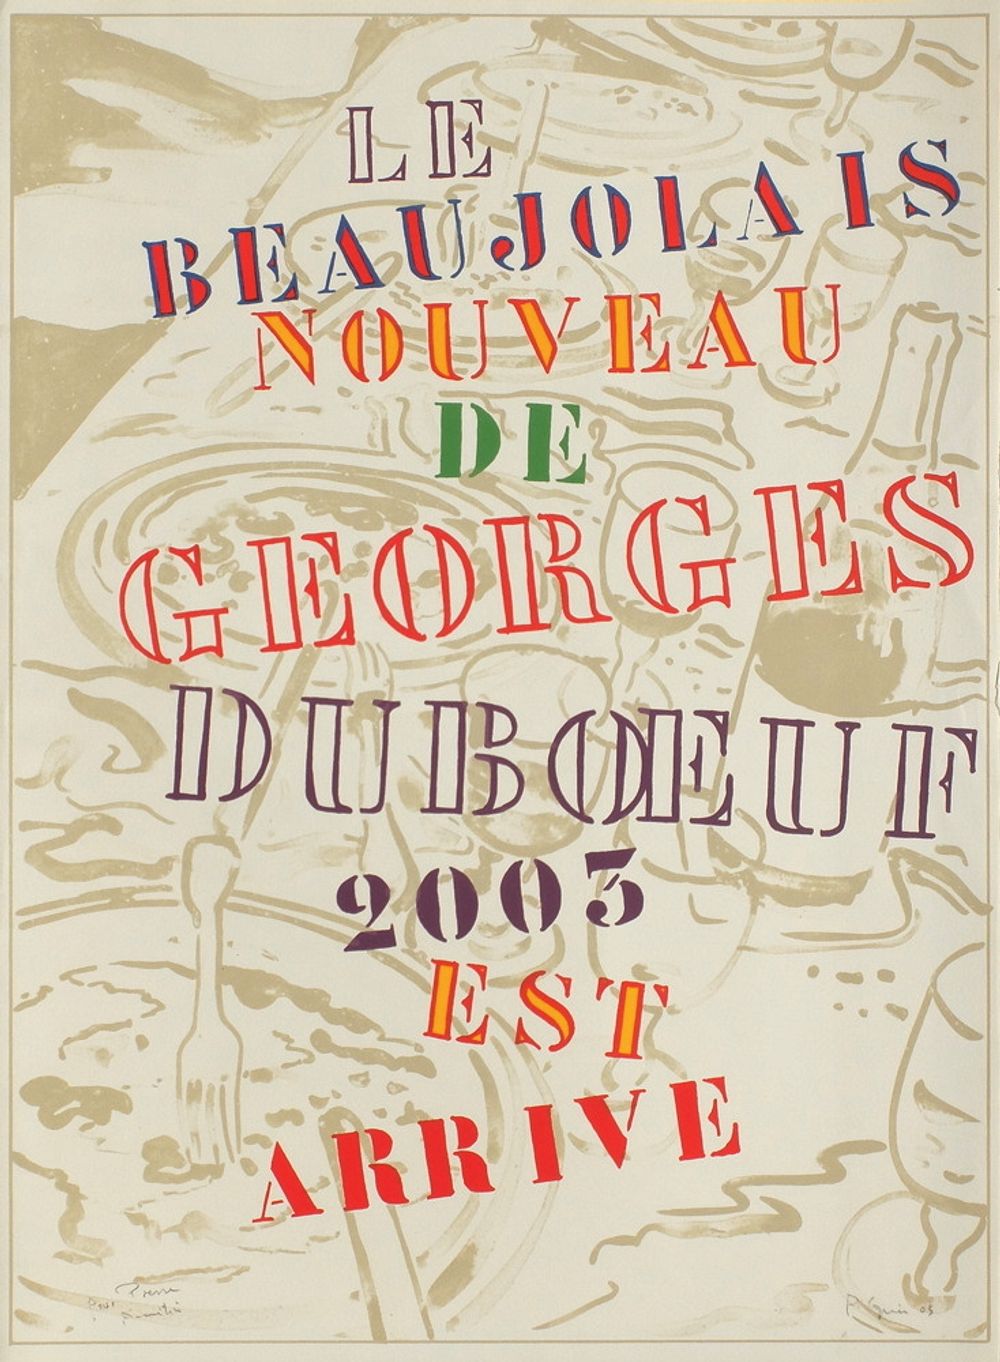 Beaujolais Georges Duboeuf 2003